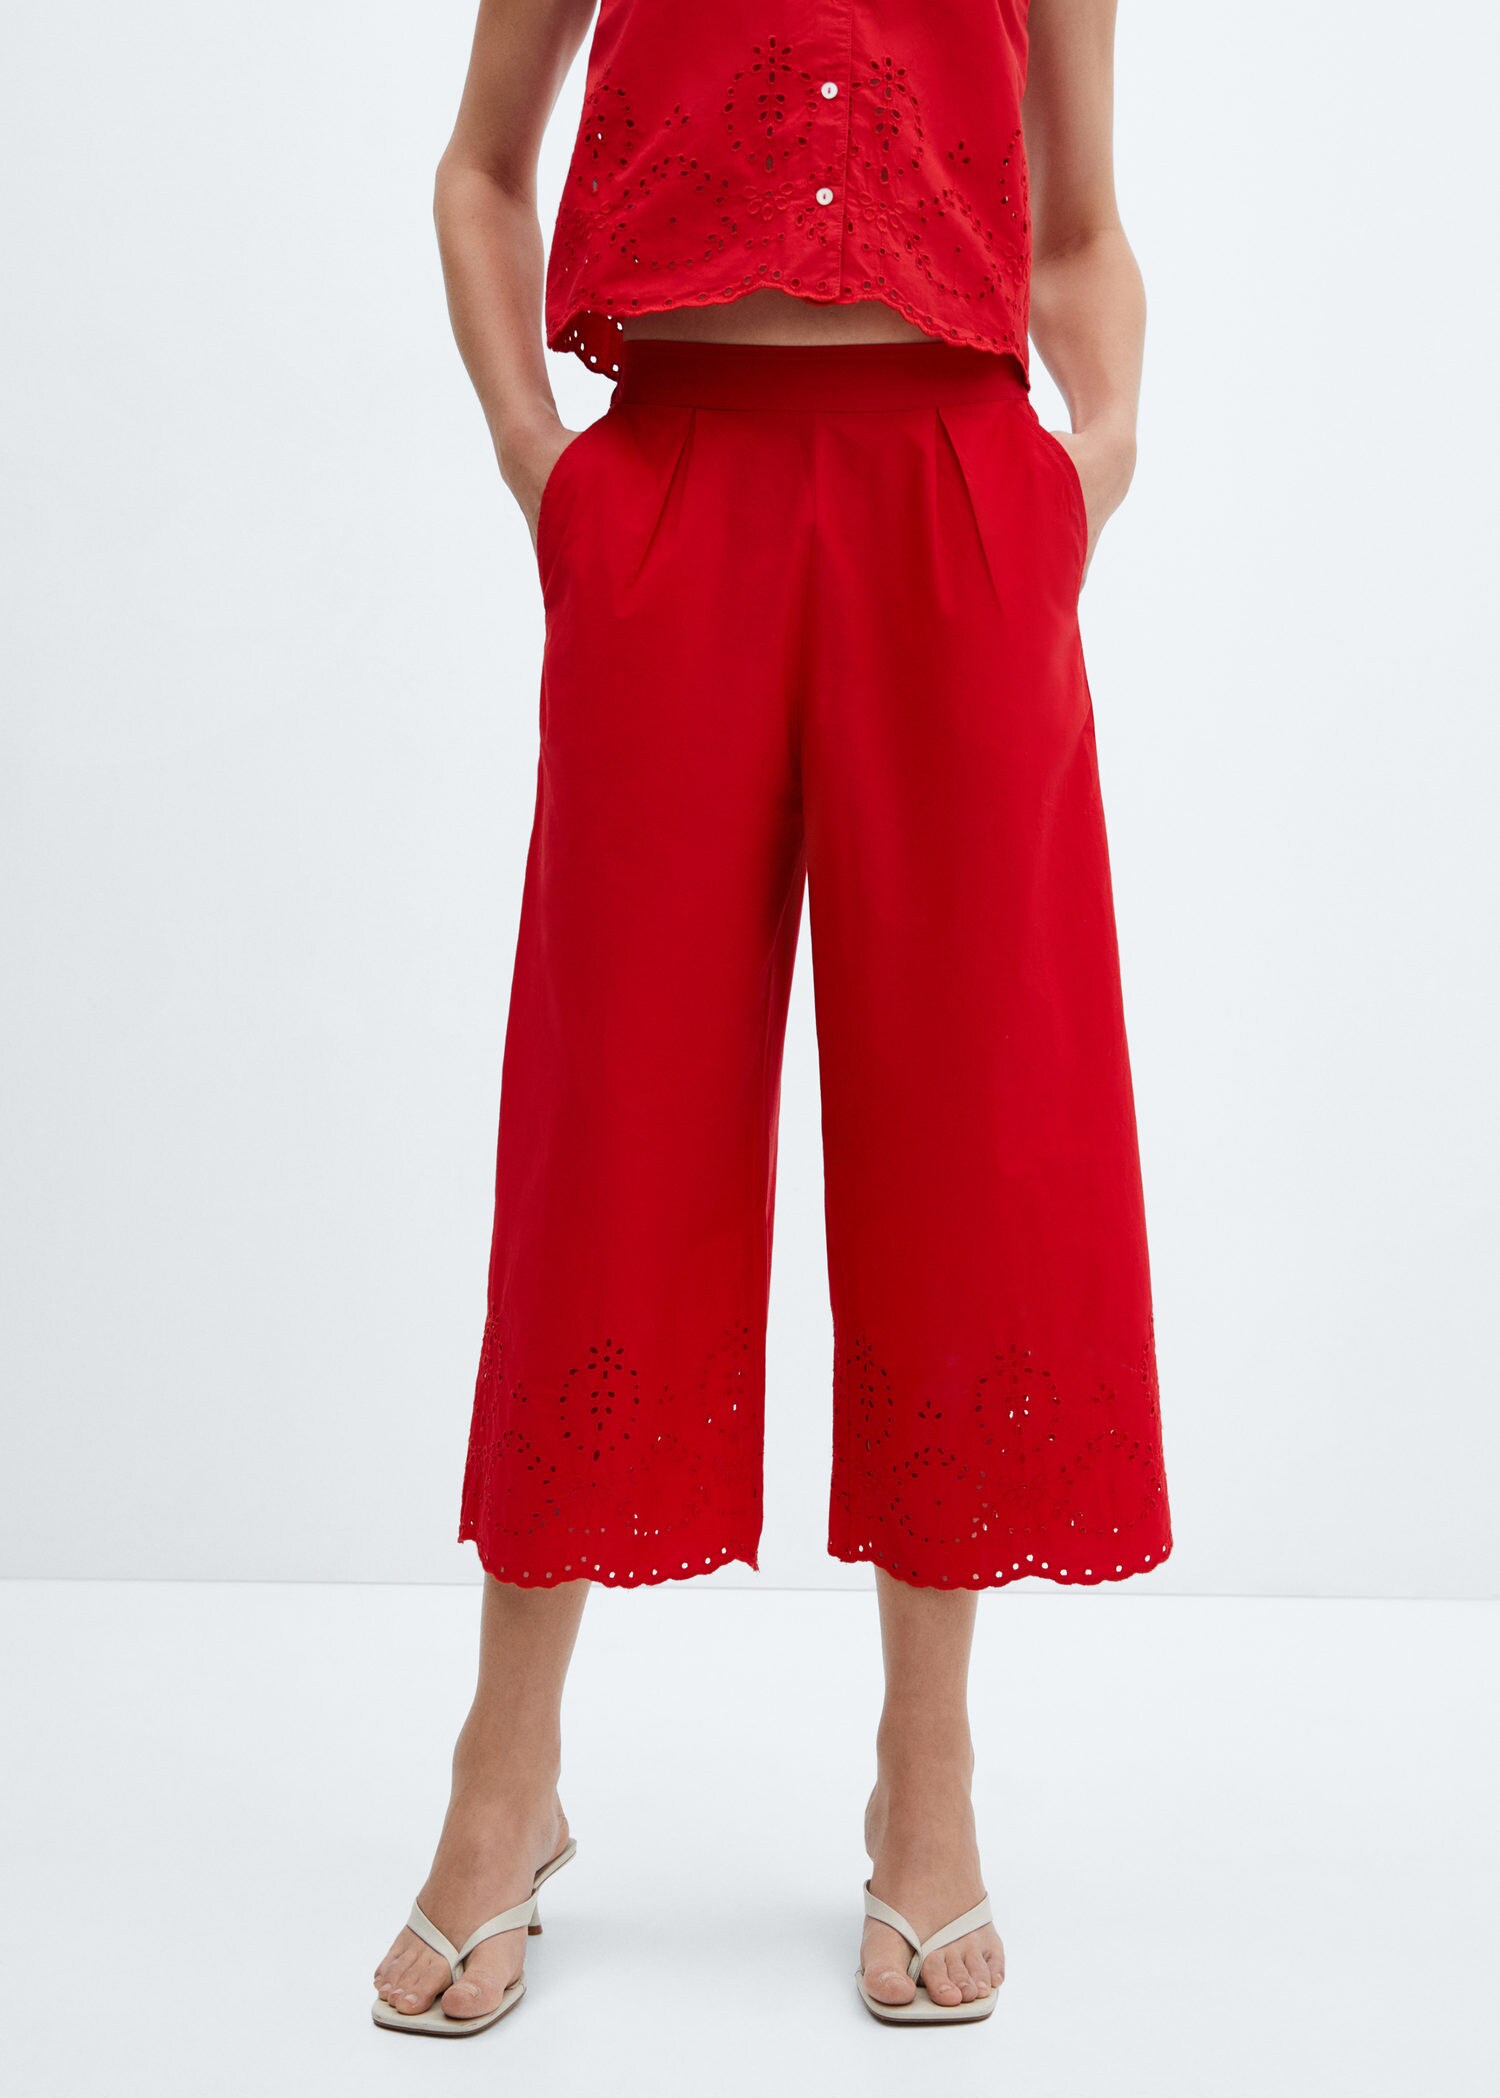 High-Waisted Linen-Blend Plus-Size Culotte Pants